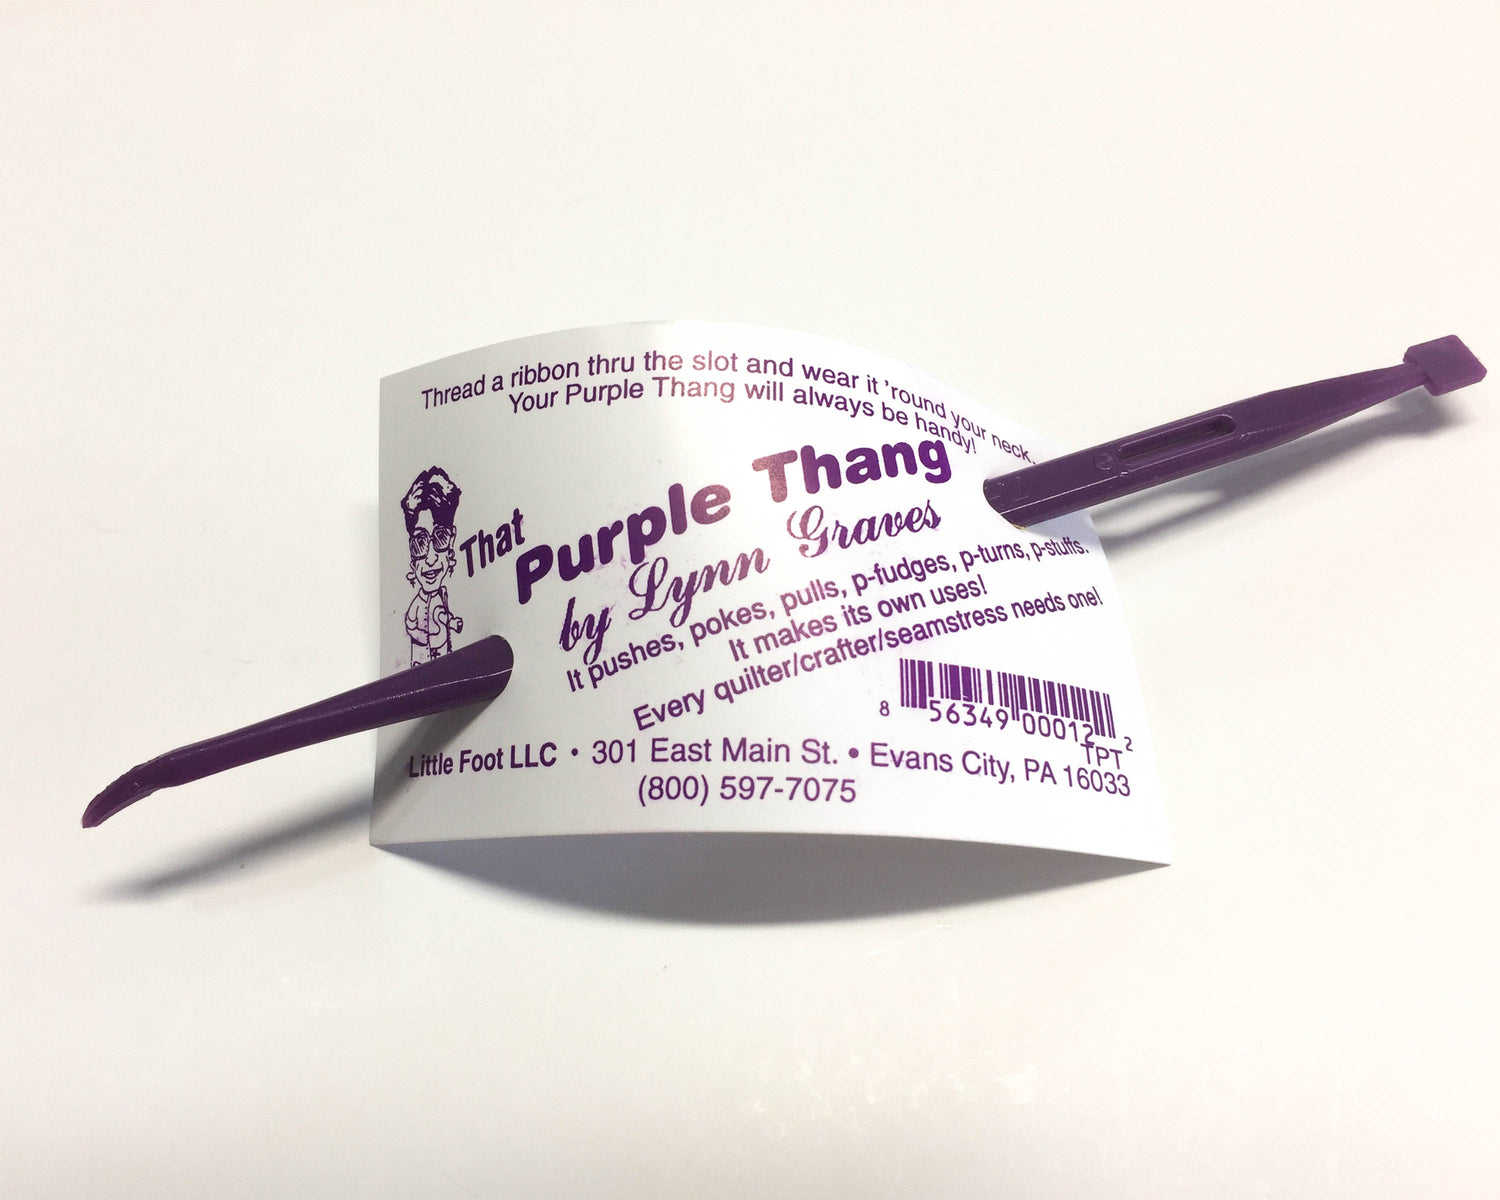 That Purple Thang by Lynn Graves